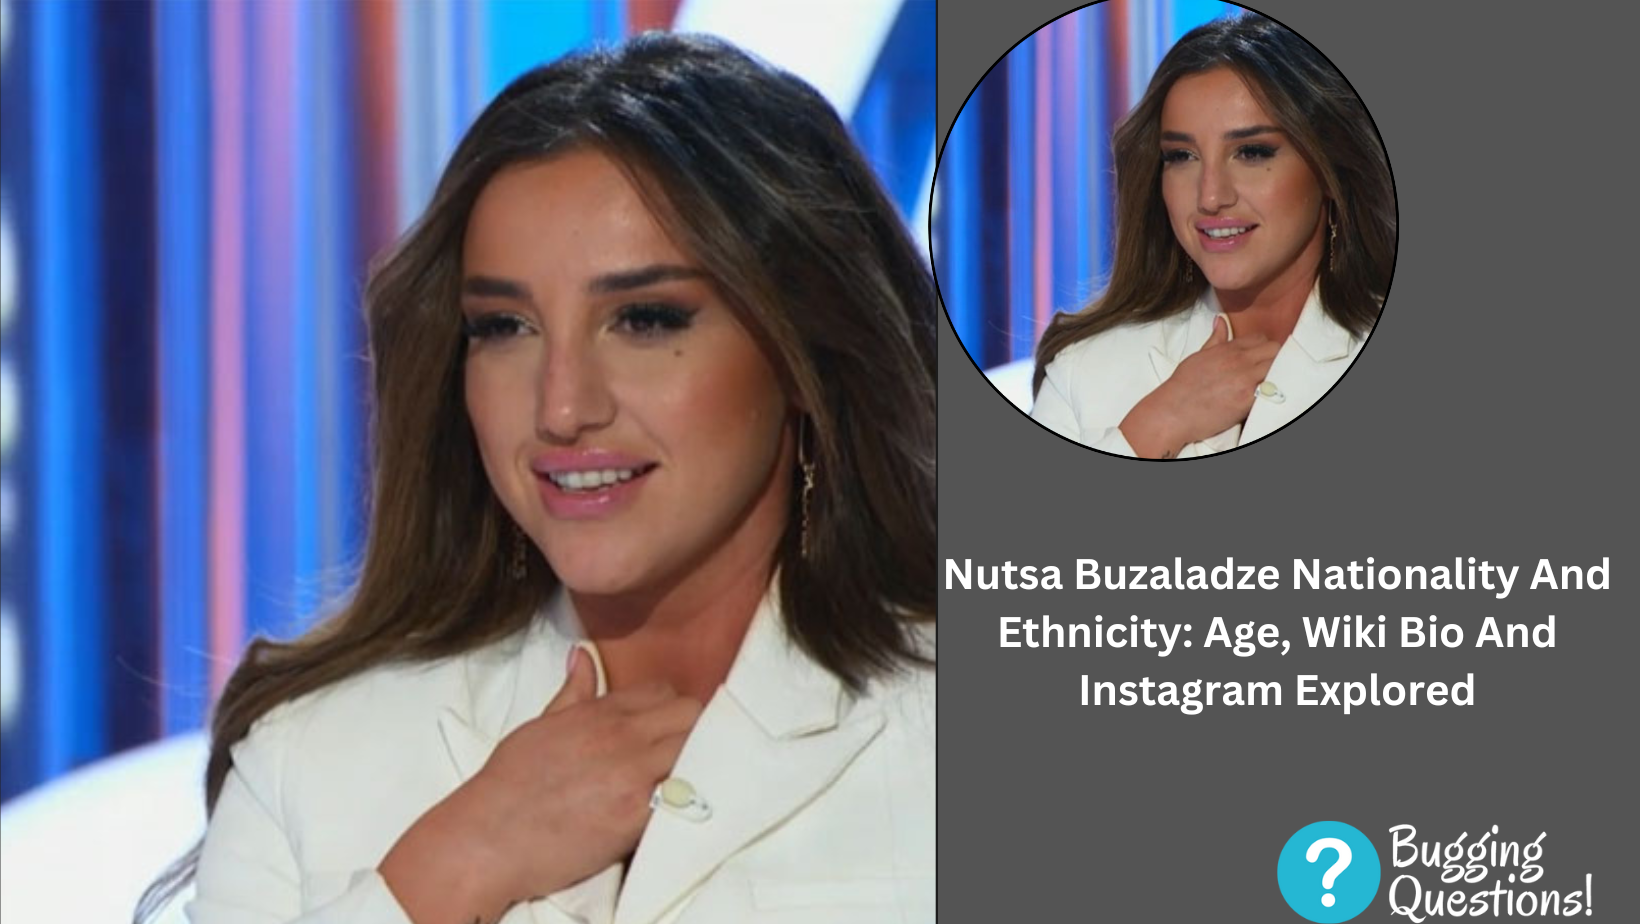 Nutsa Buzaladze Nationality And Ethnicity